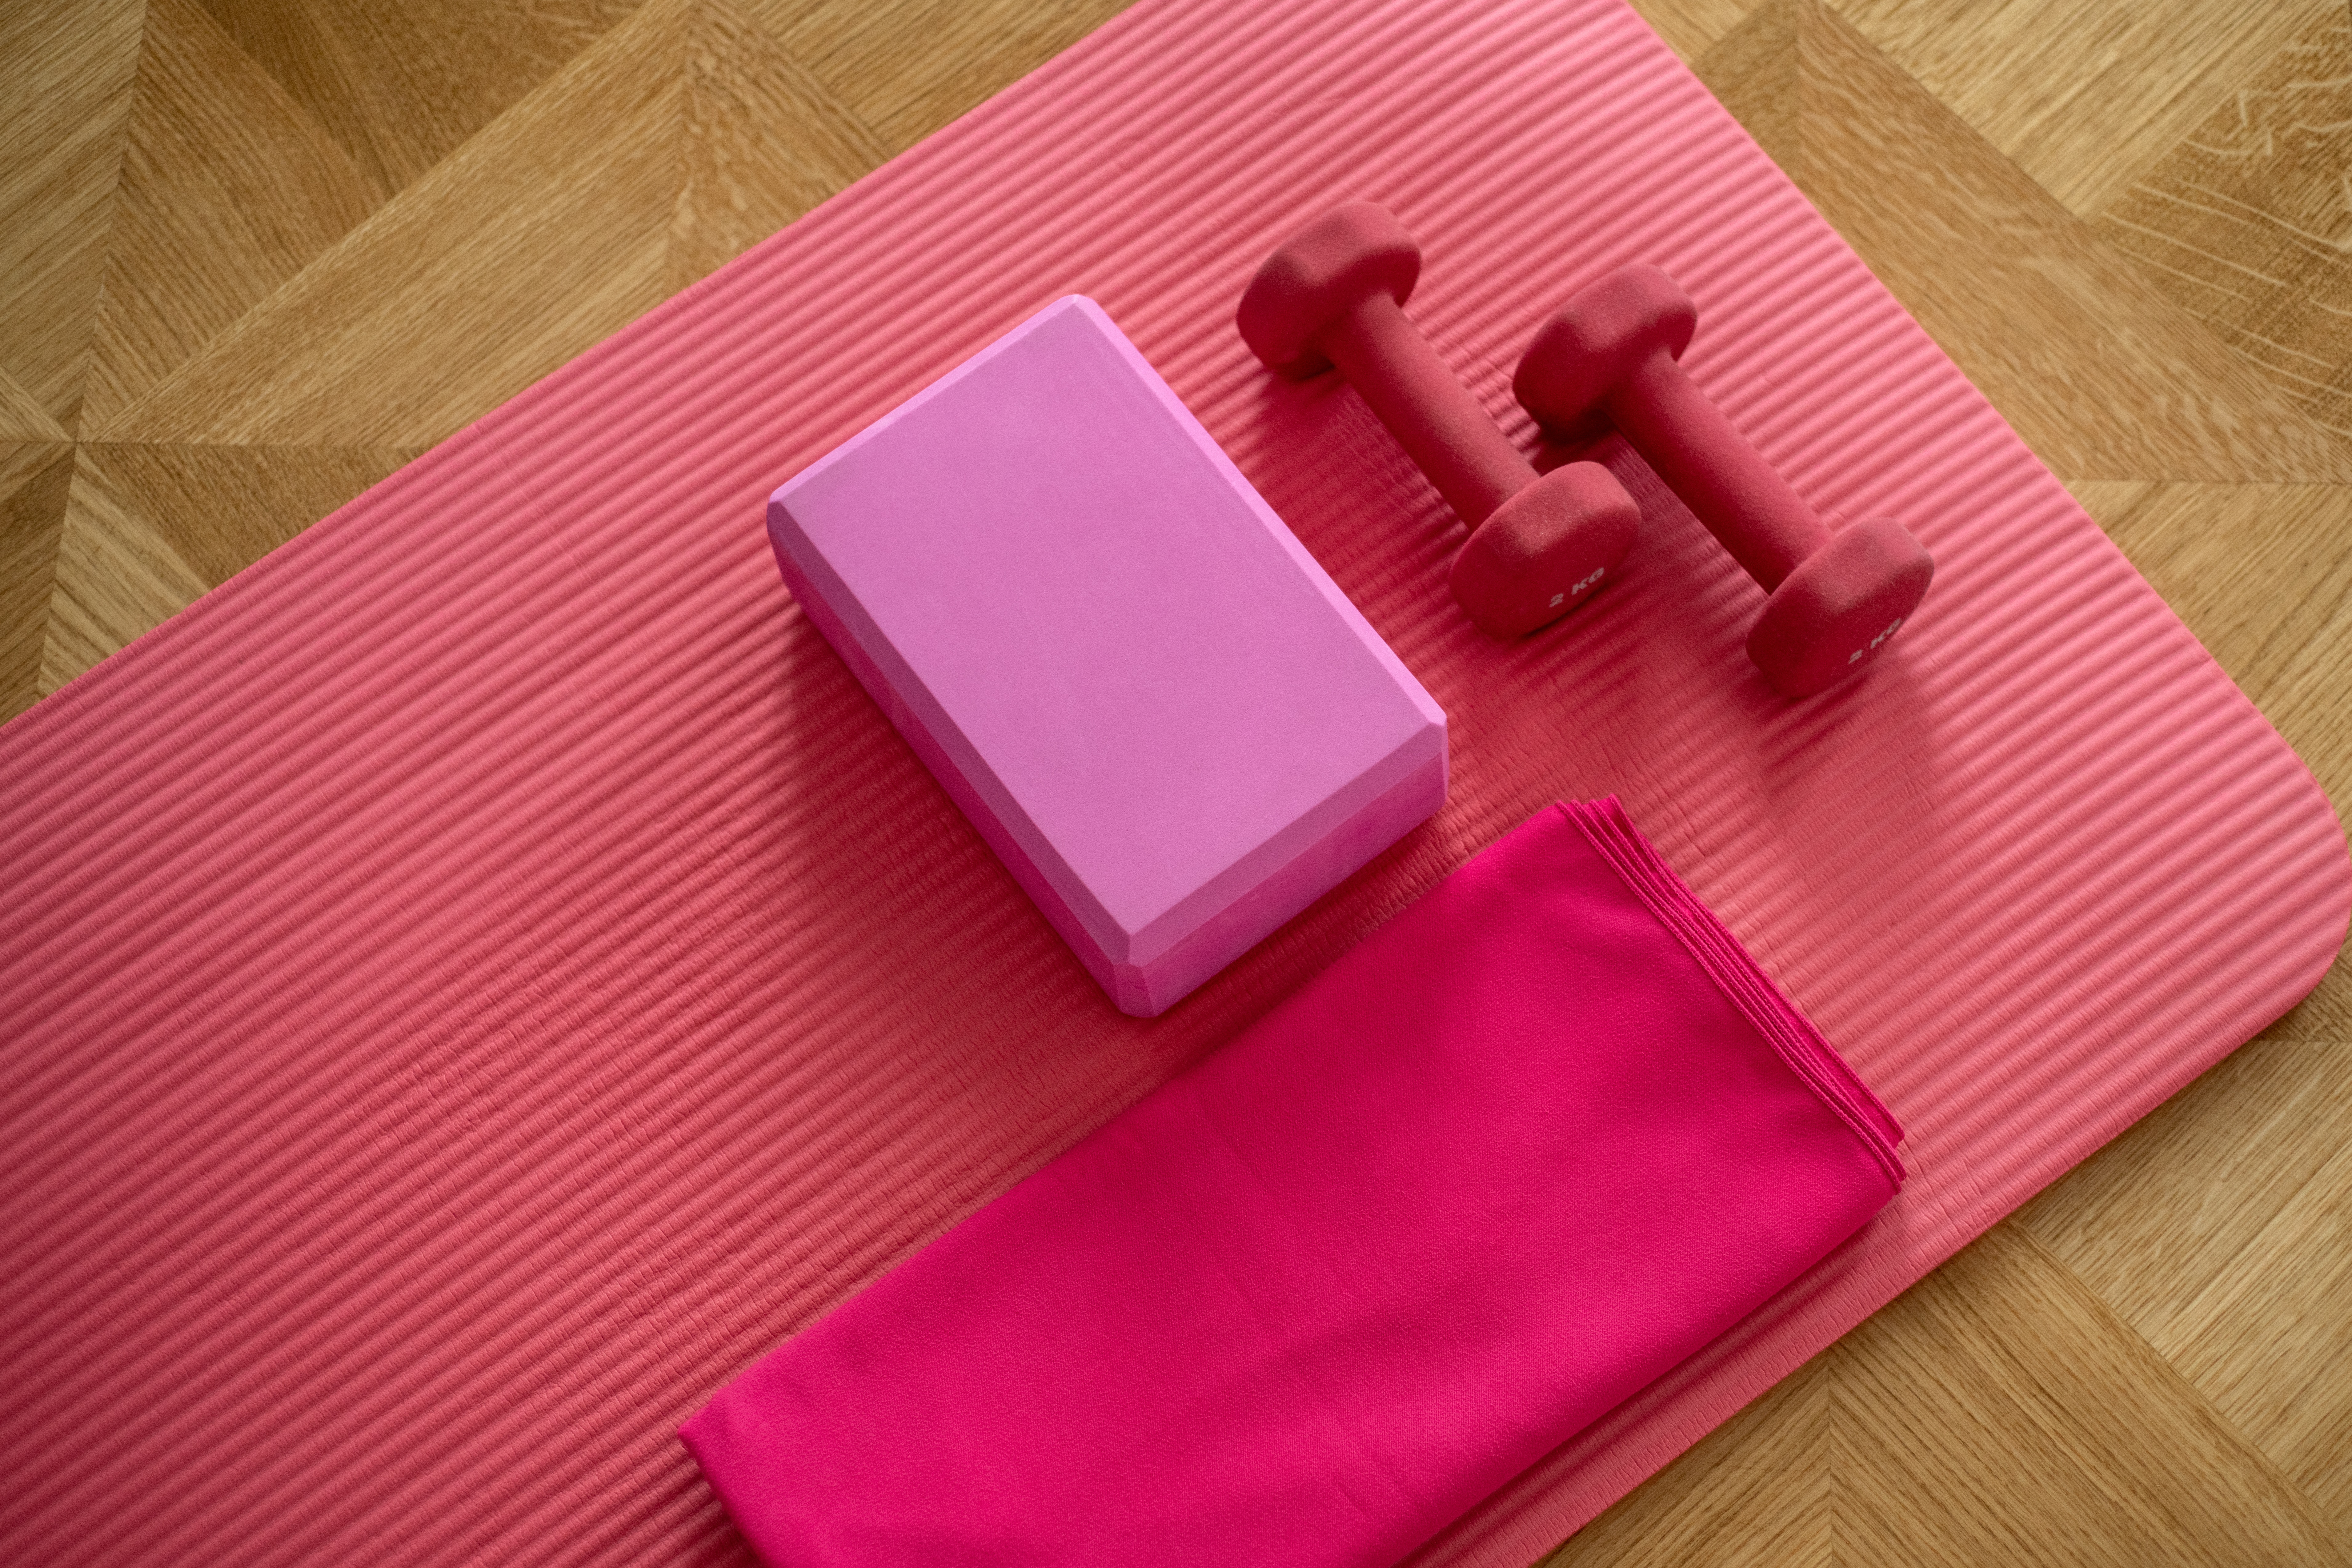 Yoga blocks and weights